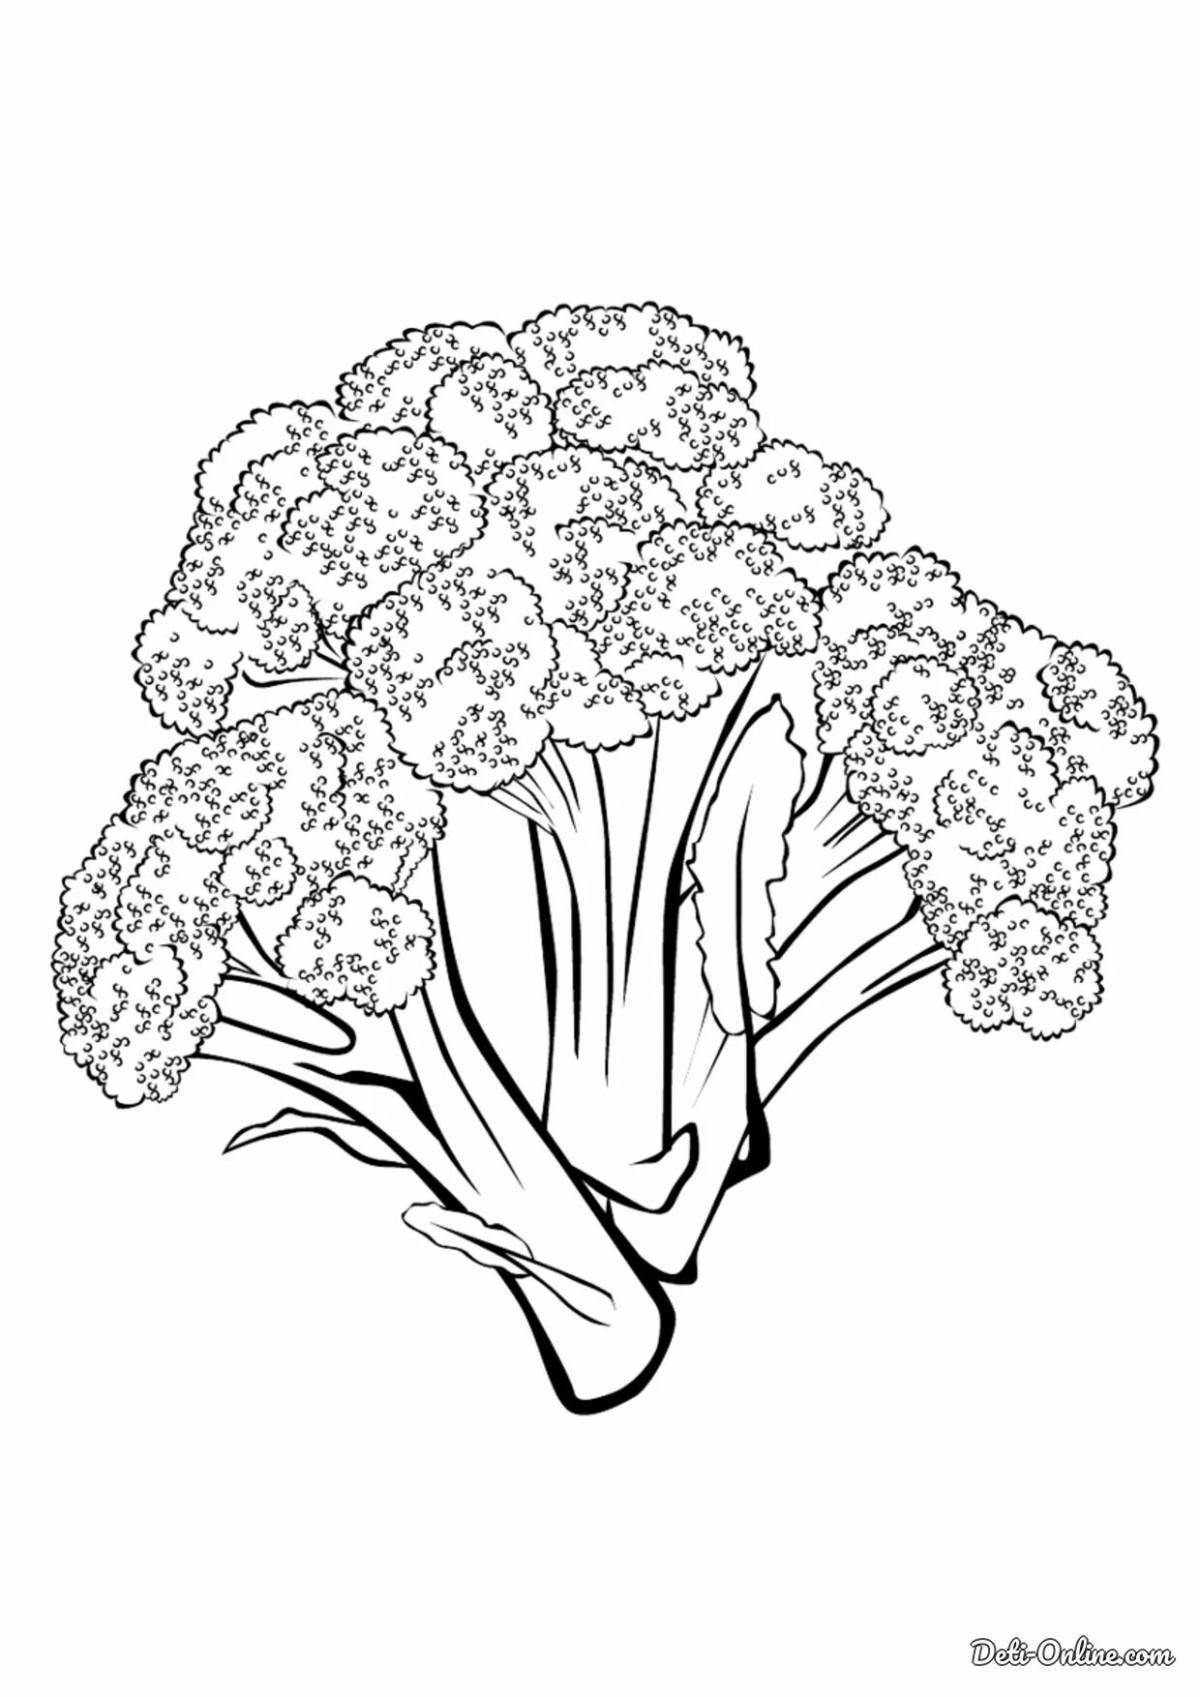 Fun broccoli coloring book